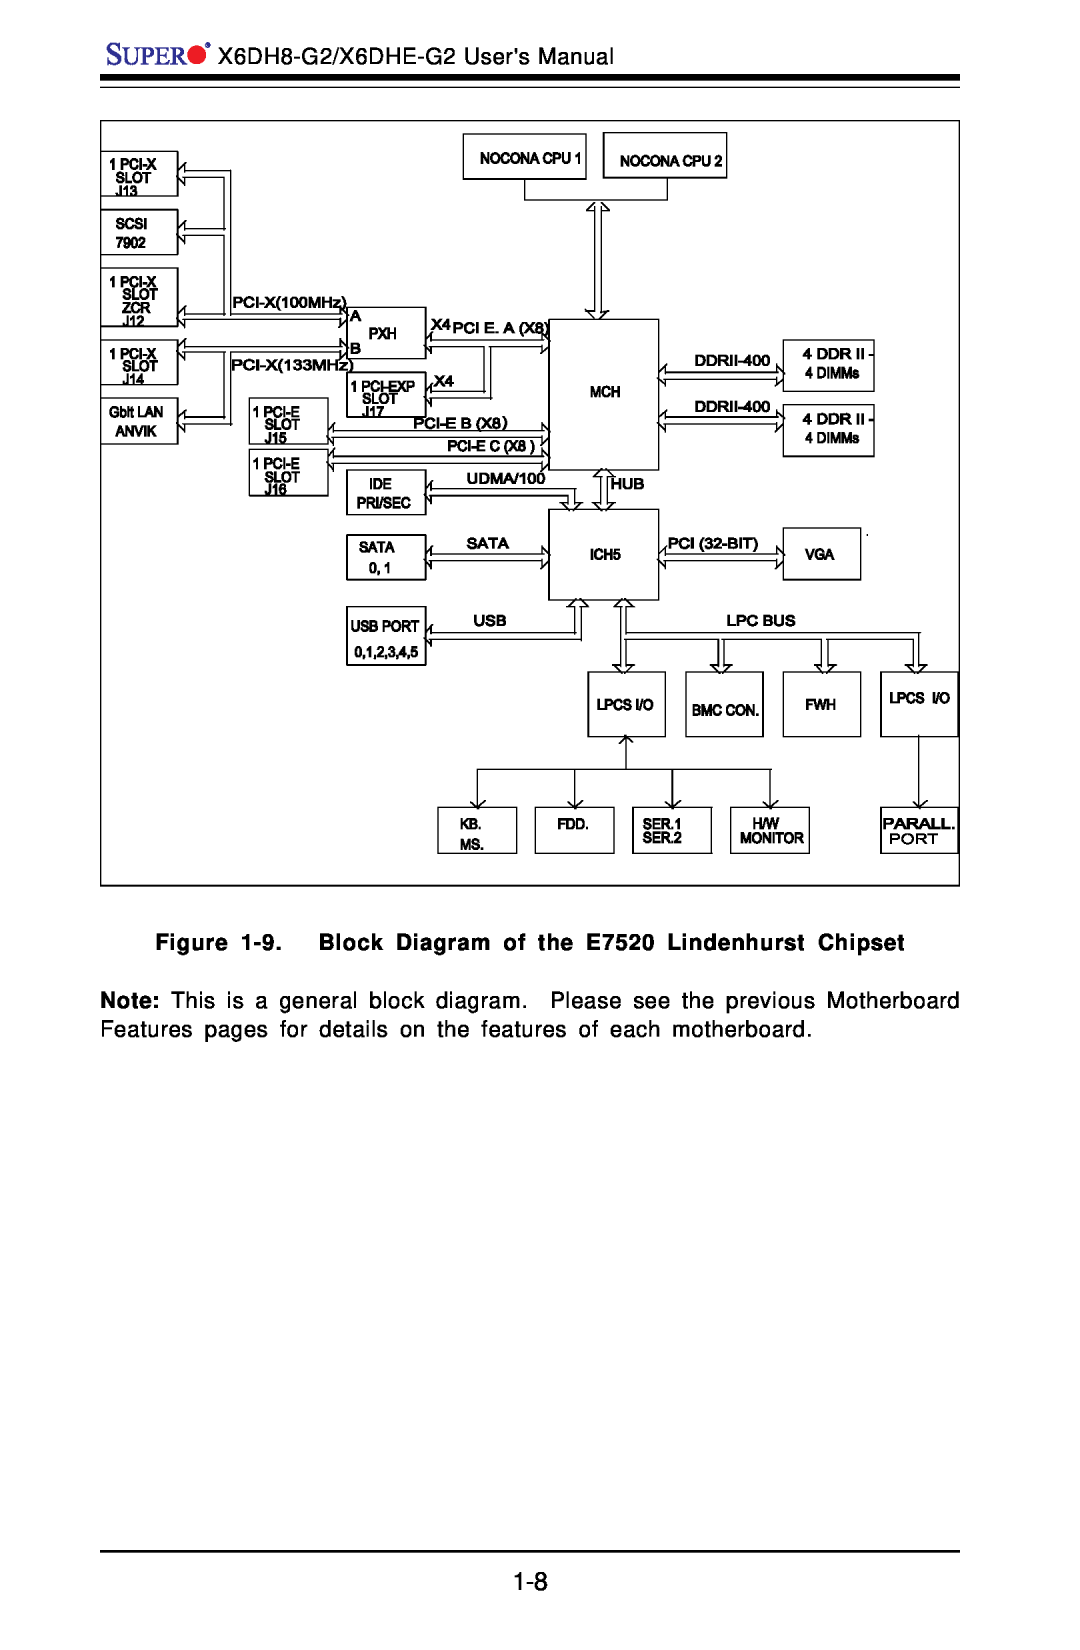 SUPER MICRO Computer X6DH8-G2, X6DHE-G2 manual 9. Block Diagram of the E7520 Lindenhurst Chipset, PCI-X100MHz 